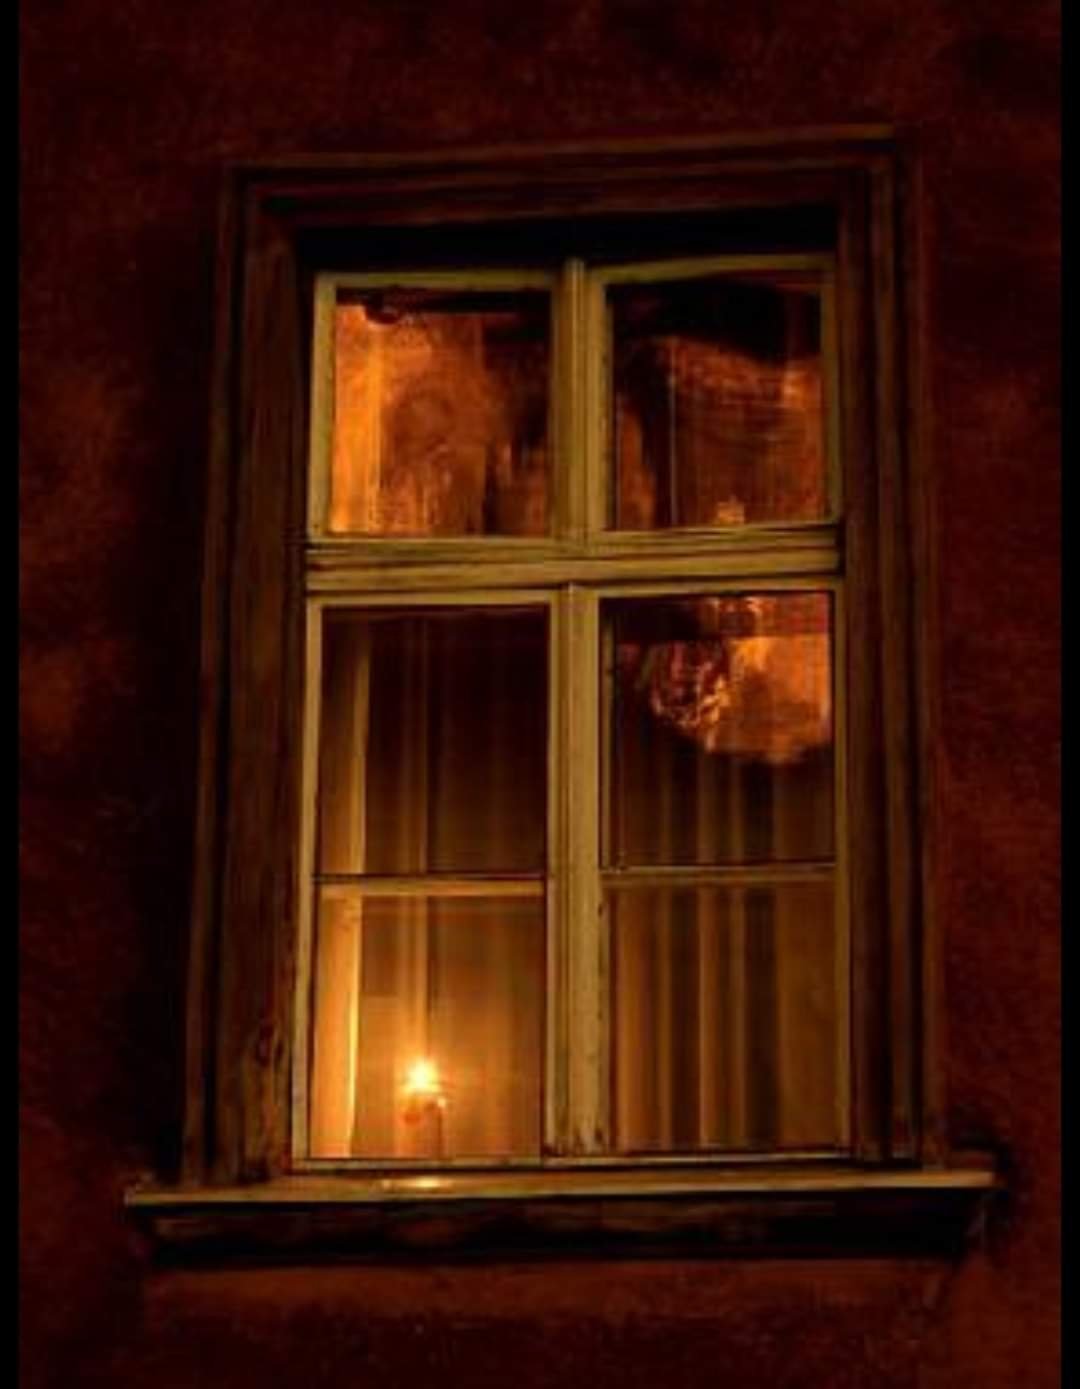 Погасли в окнах свечи. Вечернее окно. Свет в окне. Окно вечер. Вечерние окна домов.